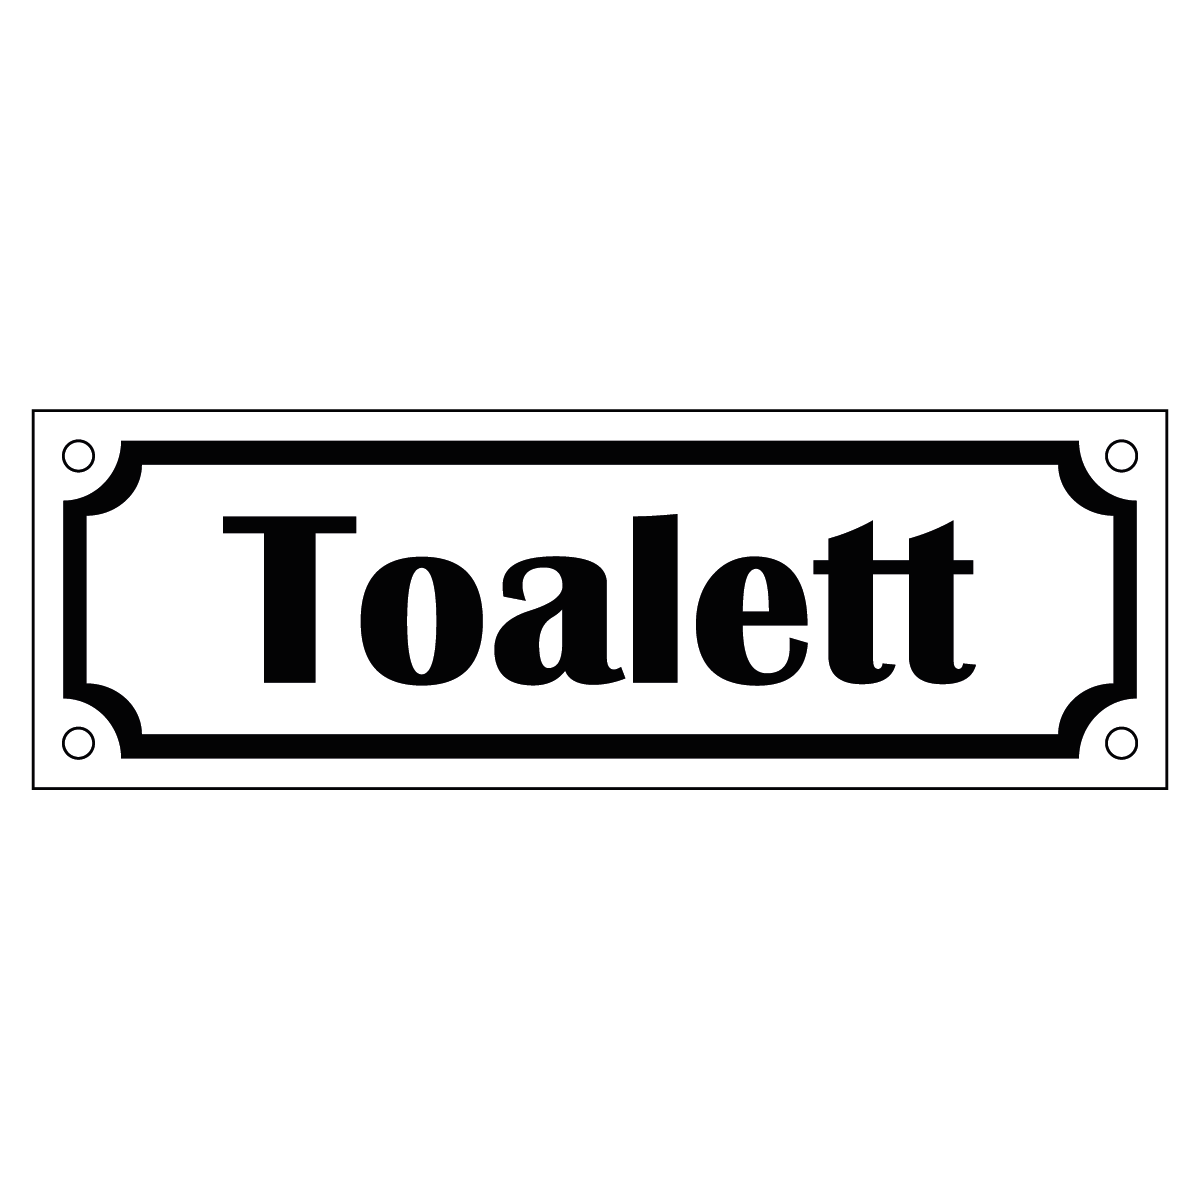 Toalett - Skylt - 150x50mm - Vit - Svart